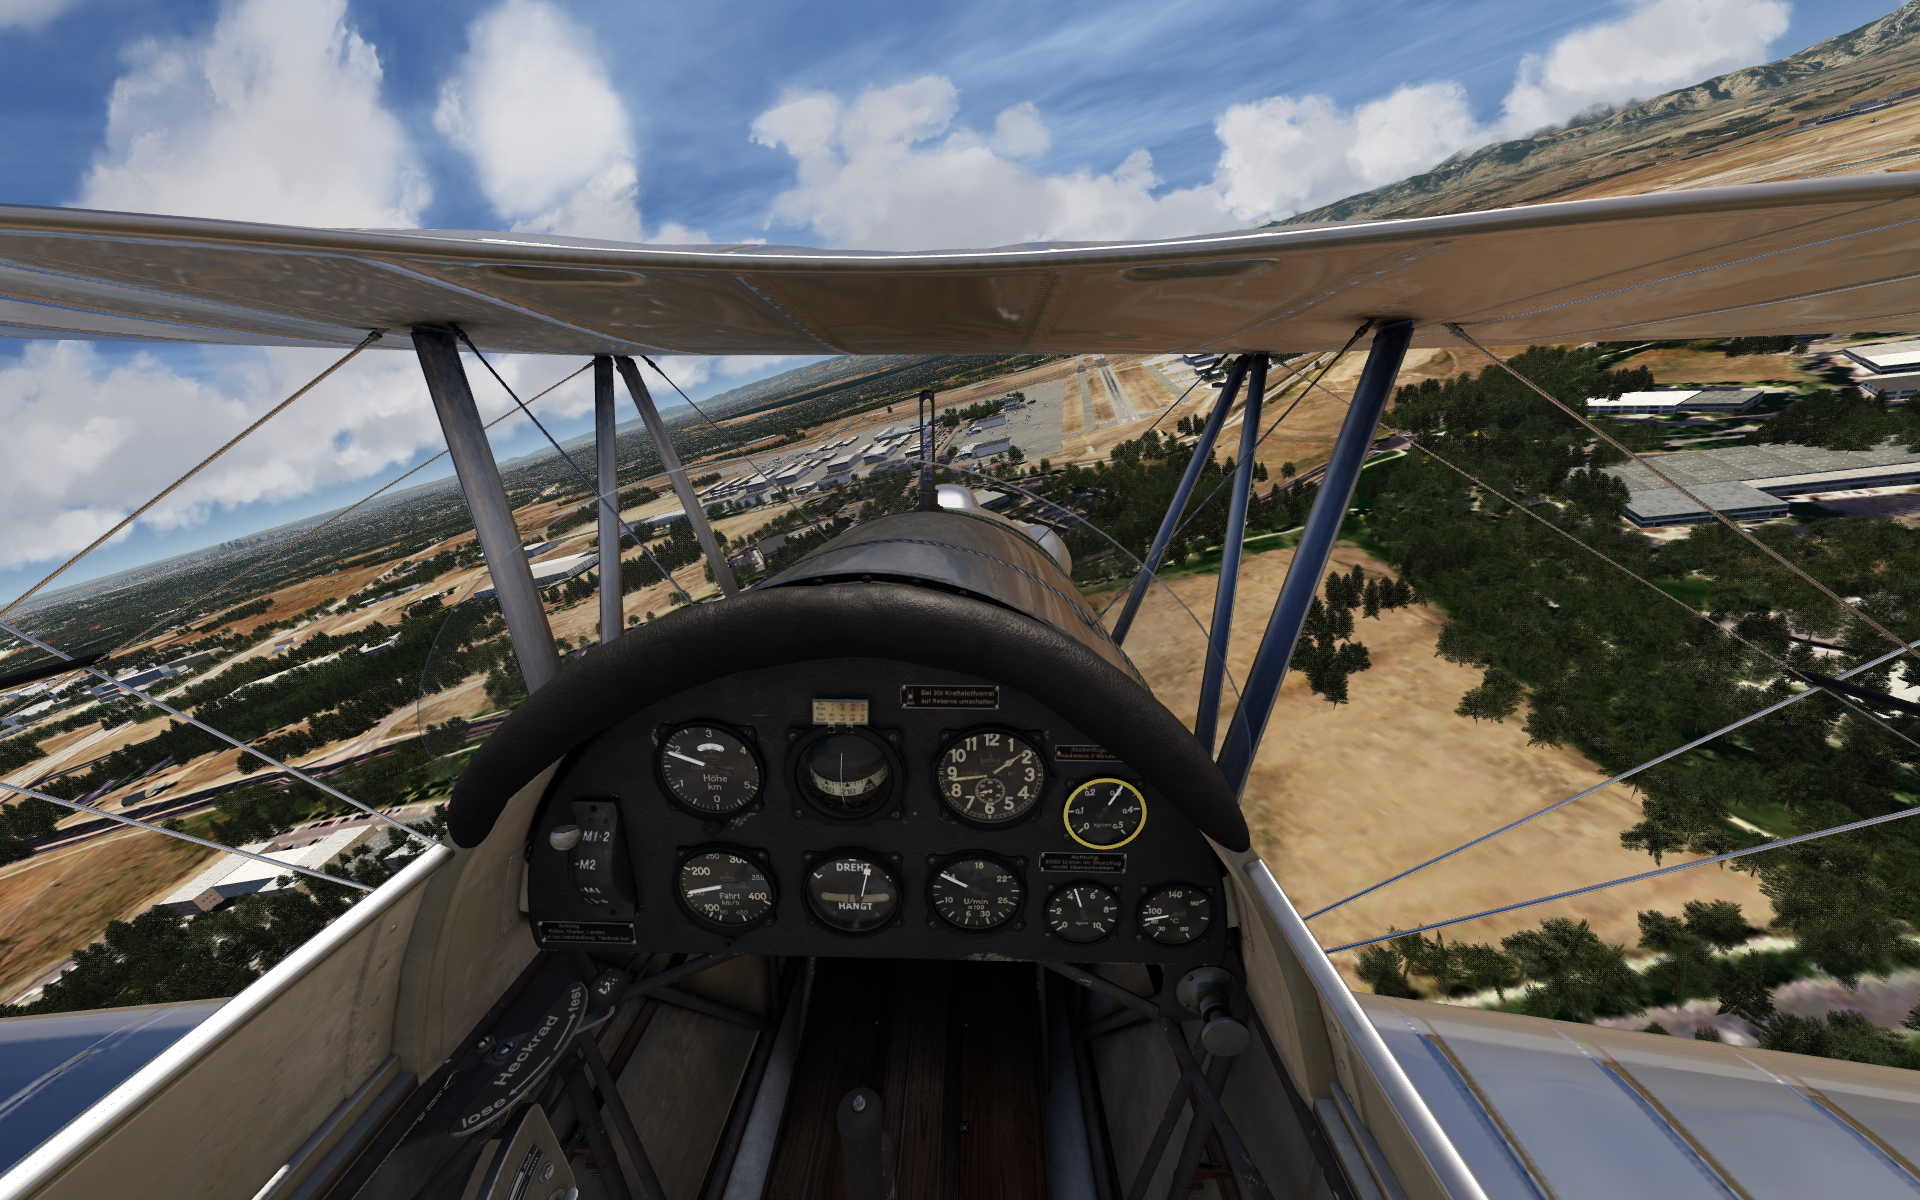 aerofly fs 2 flight simulator demo